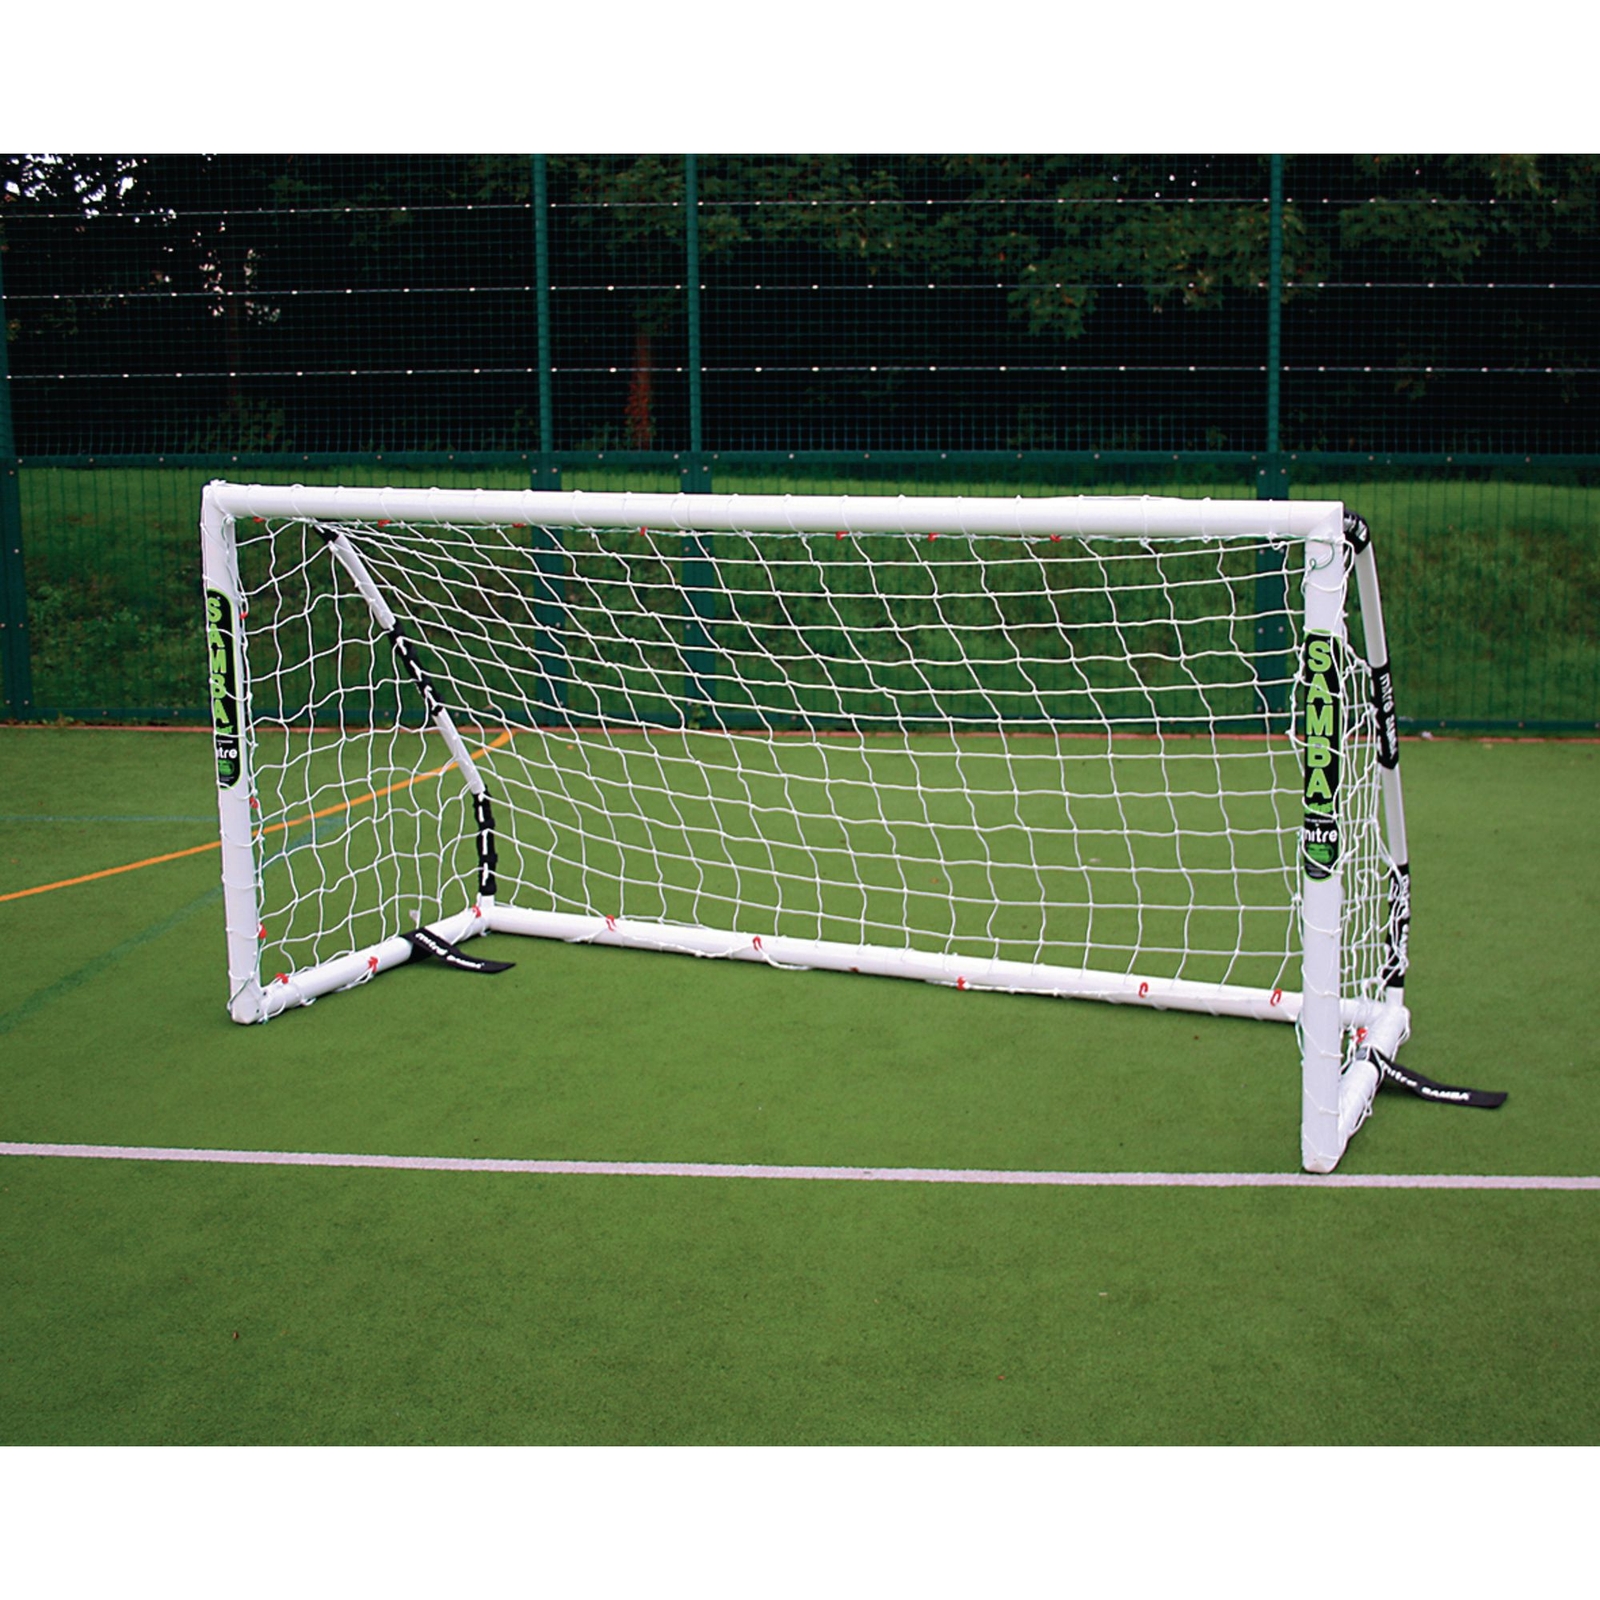 Samba Mitre PlayFast Match Goal - 8ft x 4ft